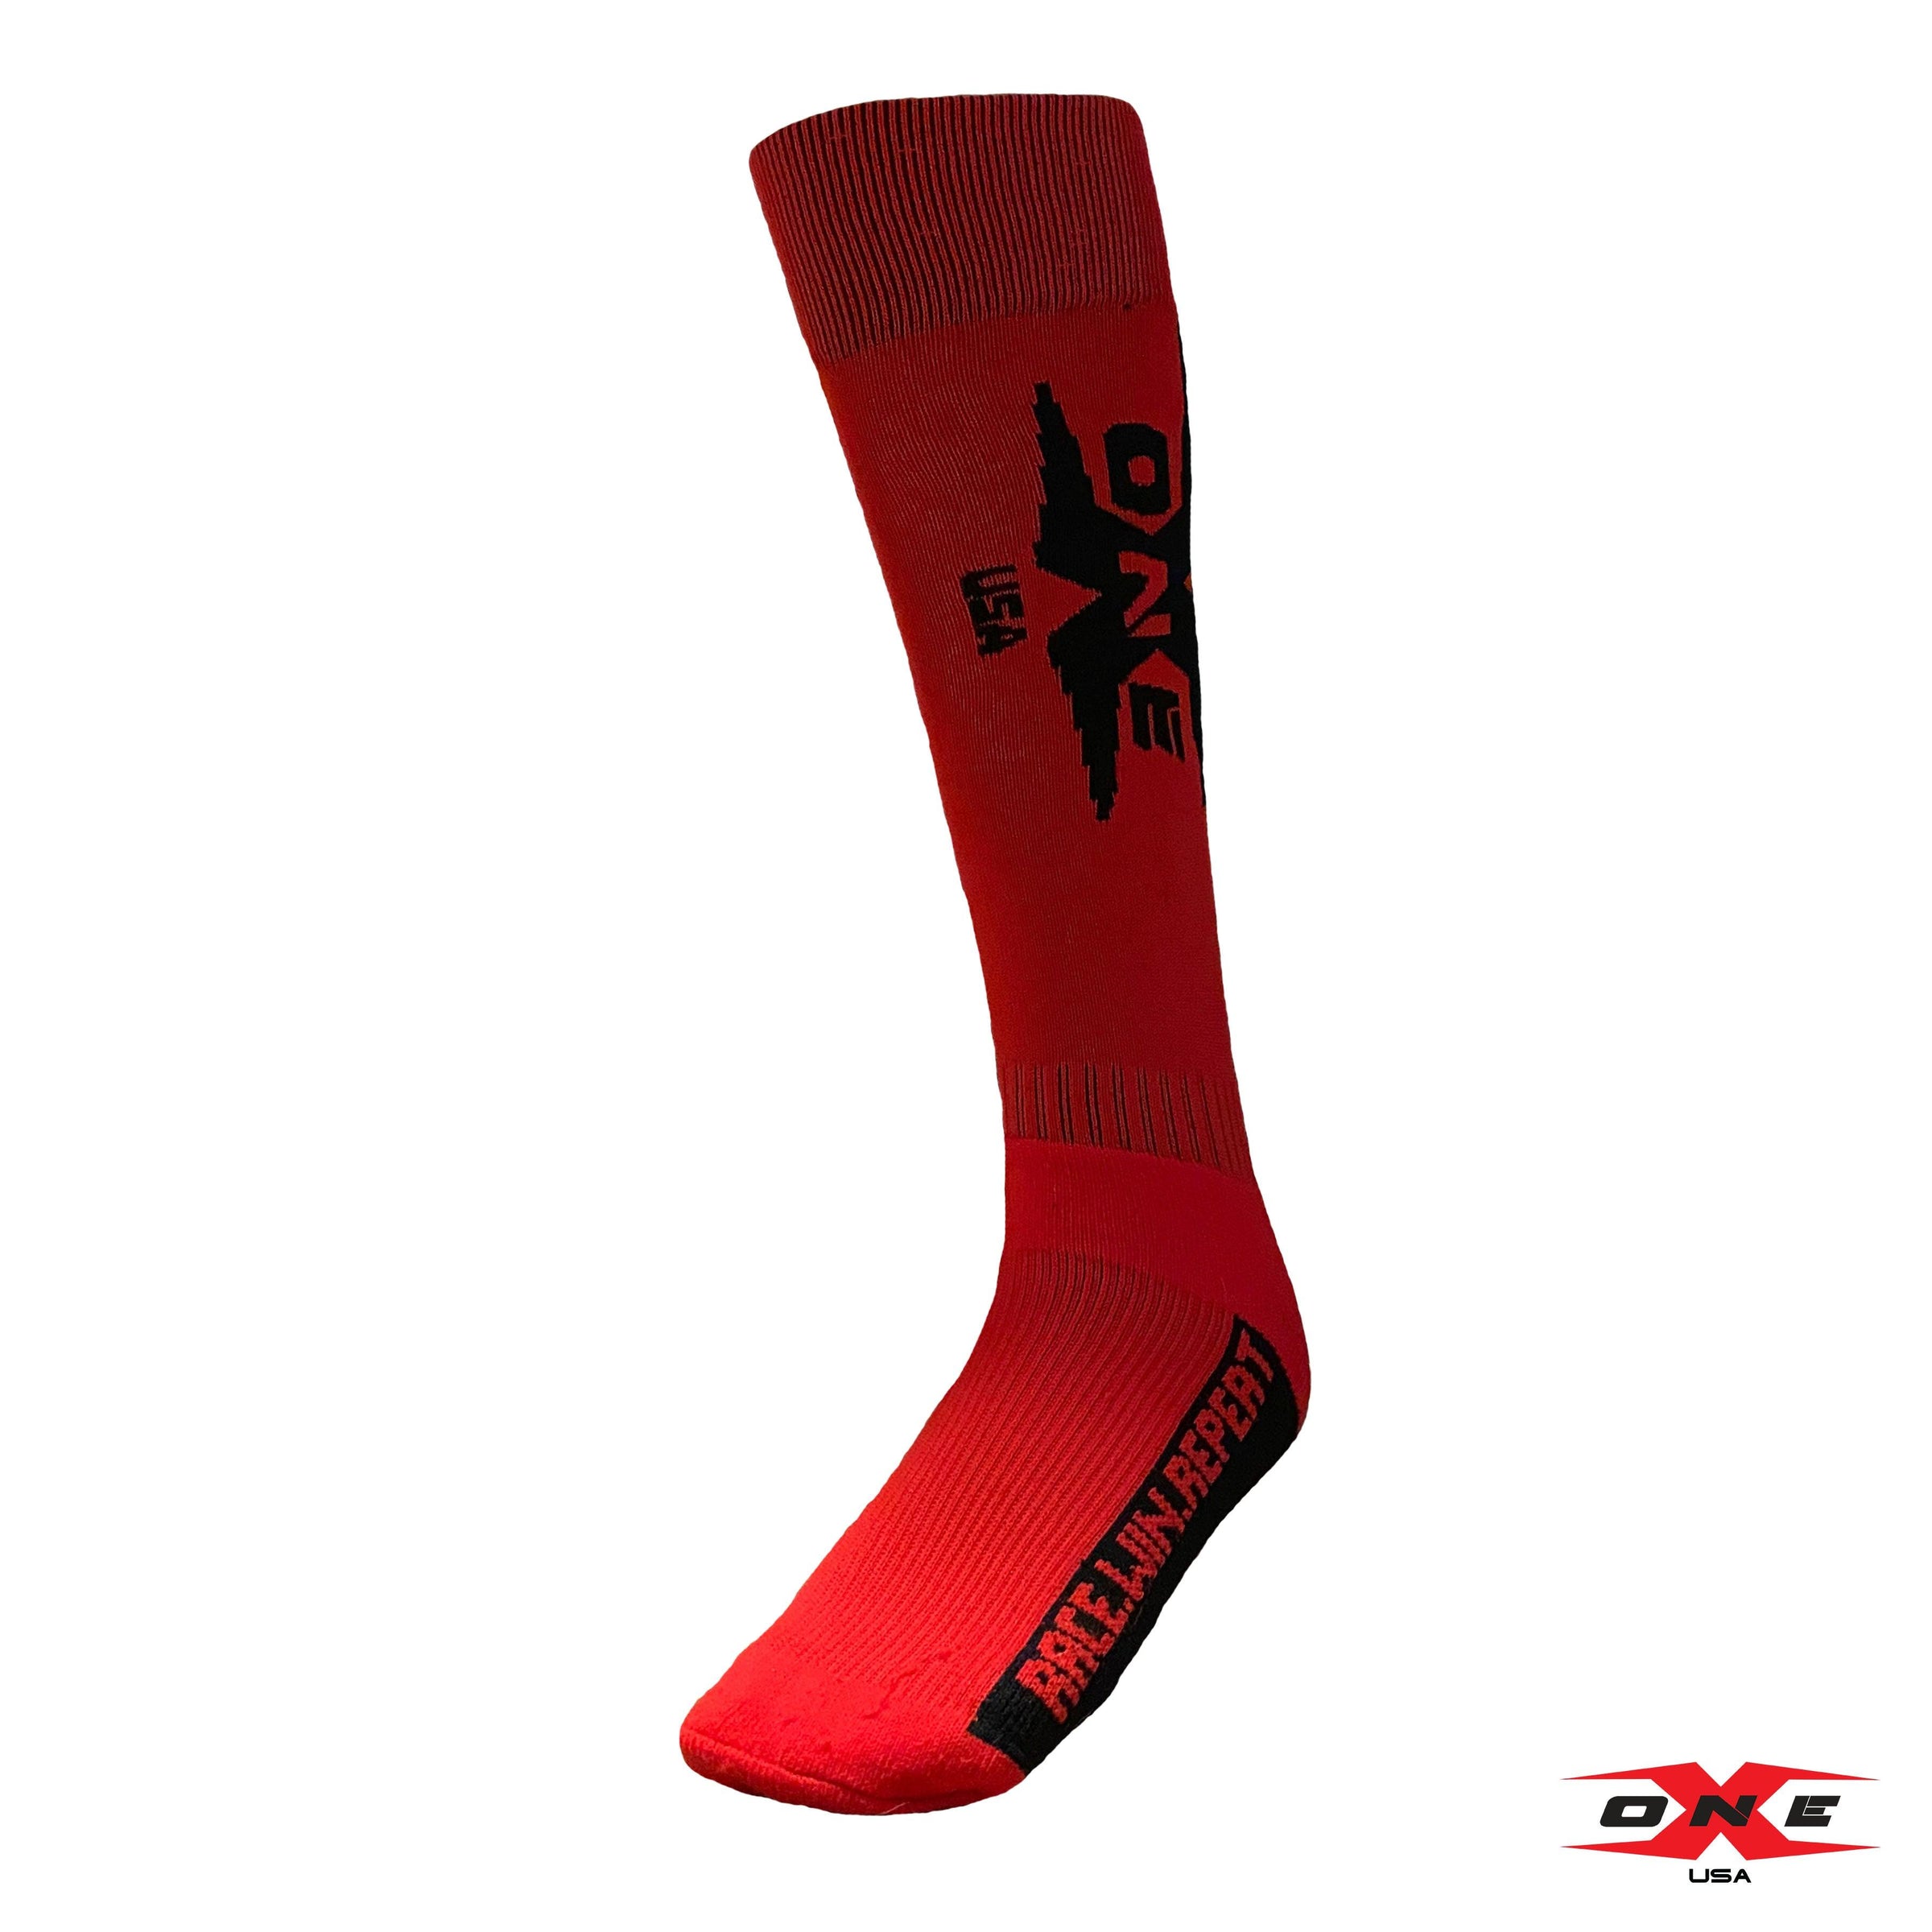 Performance Socks - OneX USA